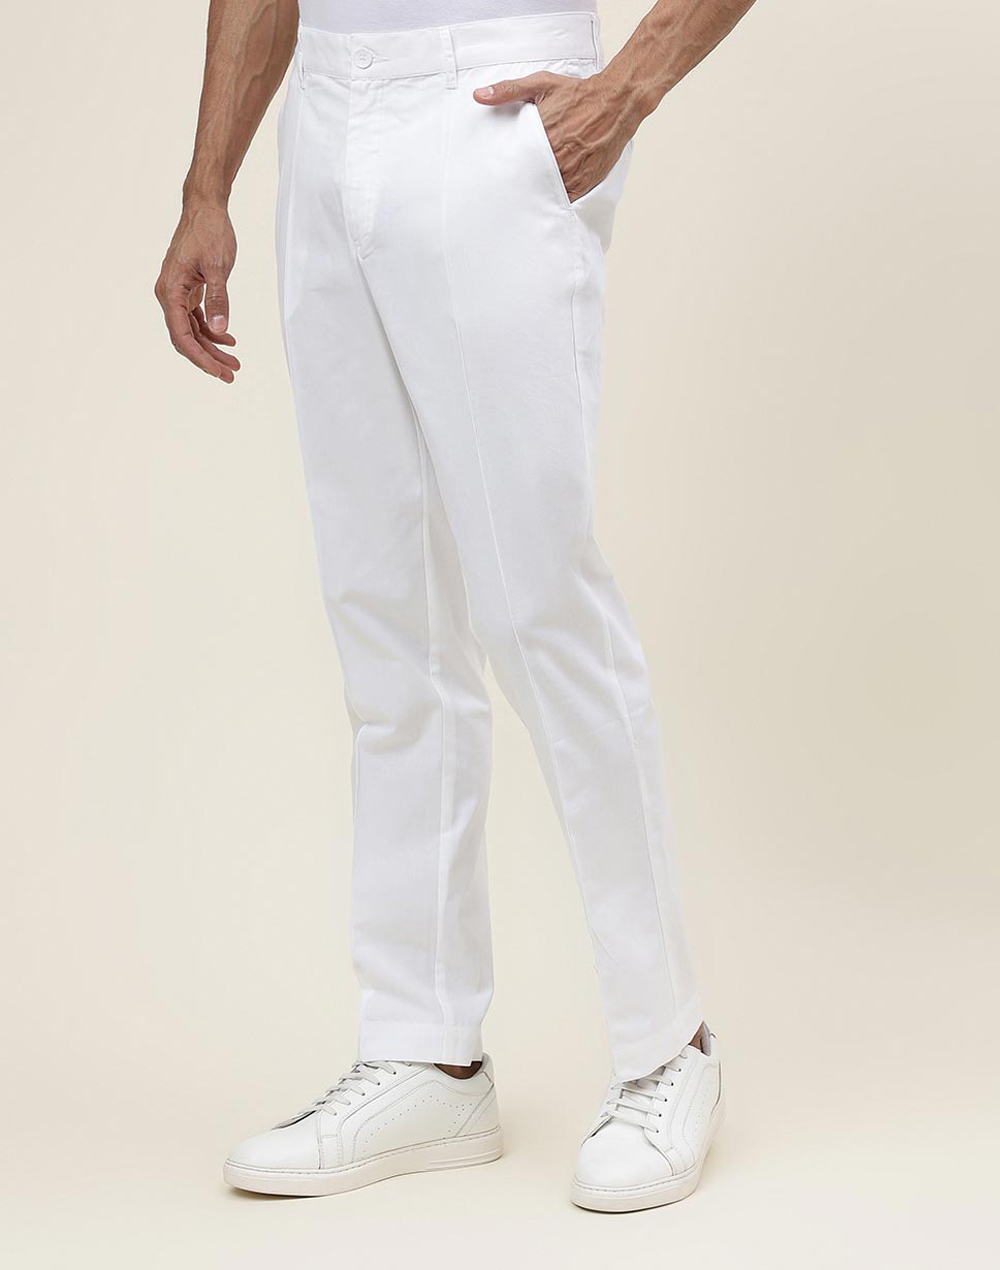 Buy White Cotton Slim Fit Jama Pants for Men Online at Fabindia | 20053330